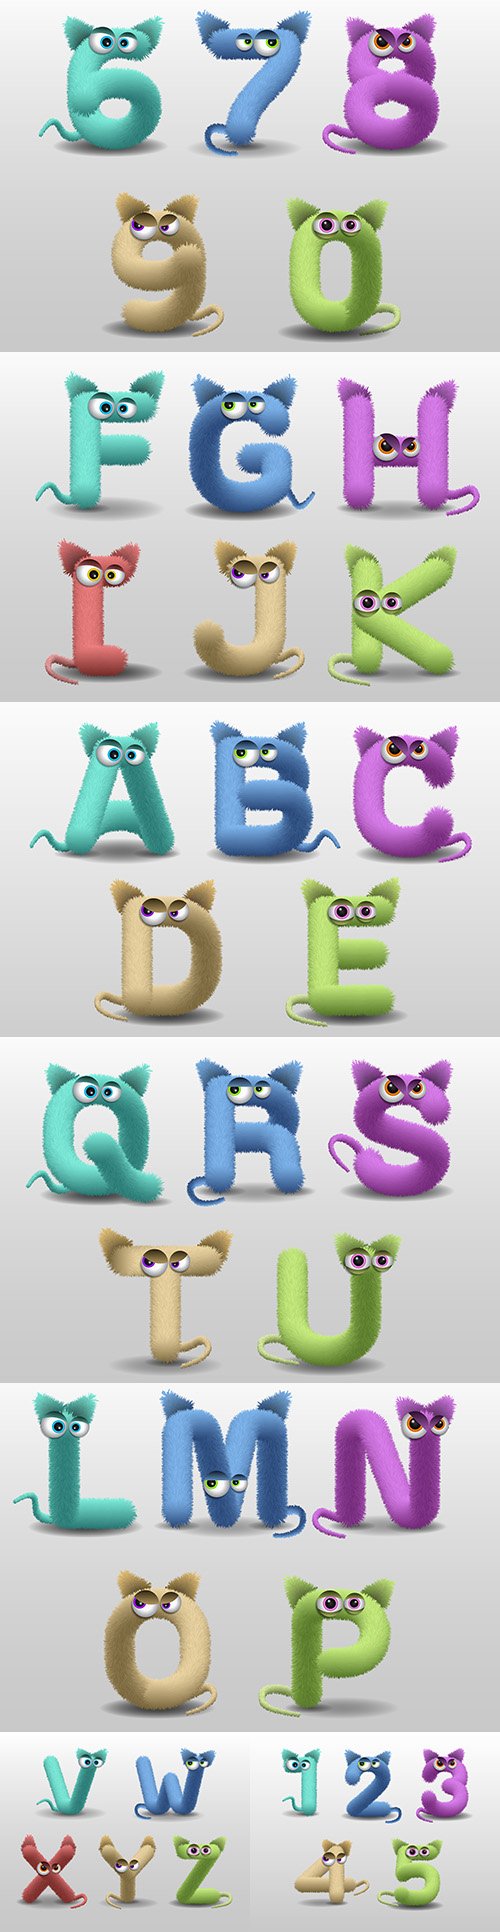 Fur monster cartoon cute alphabet with chicks